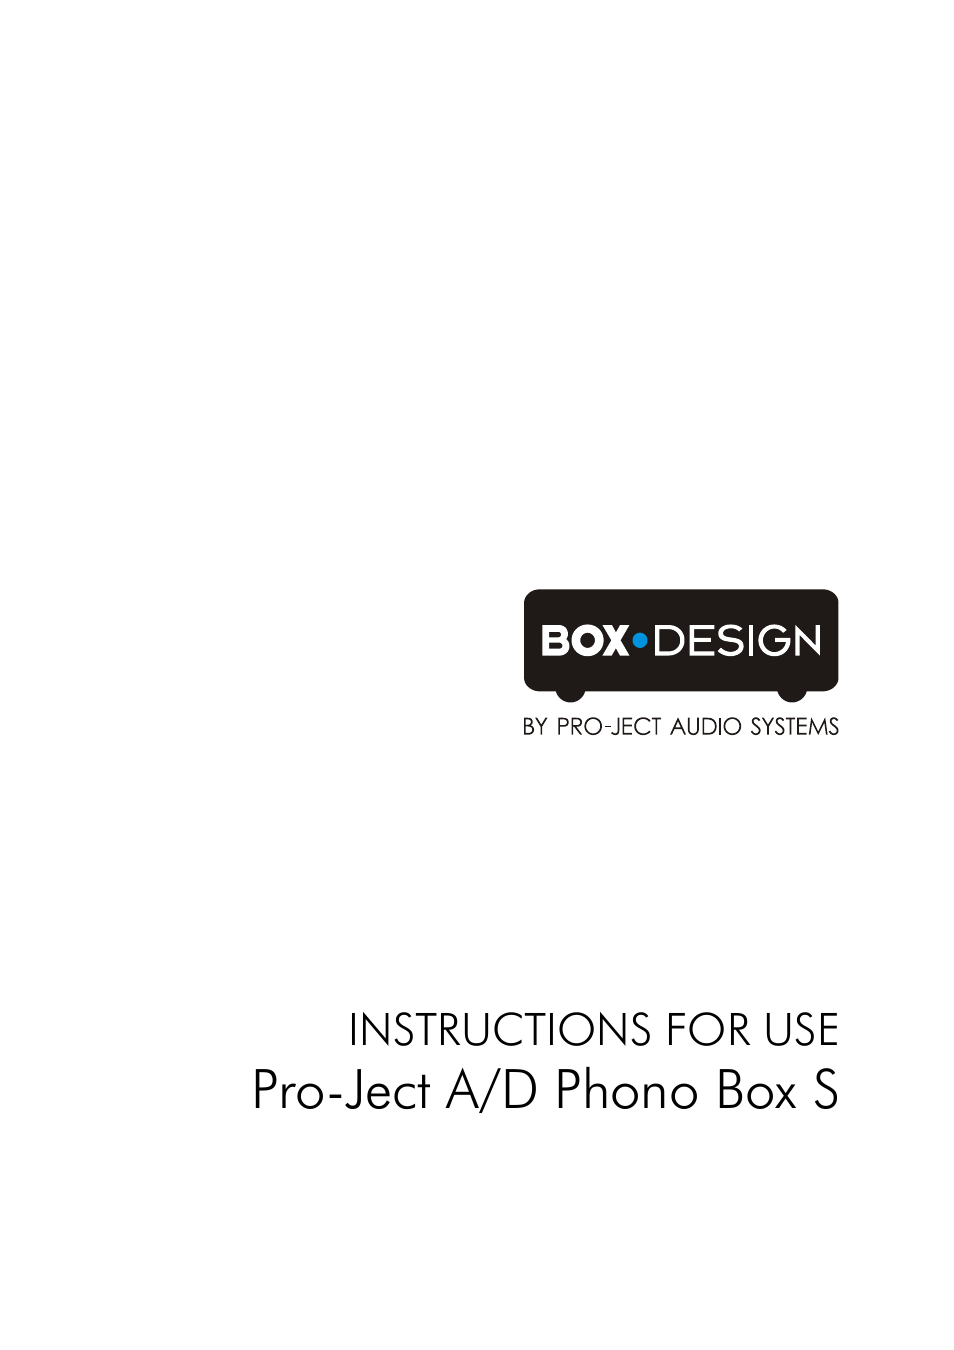 A/D Phono Box S